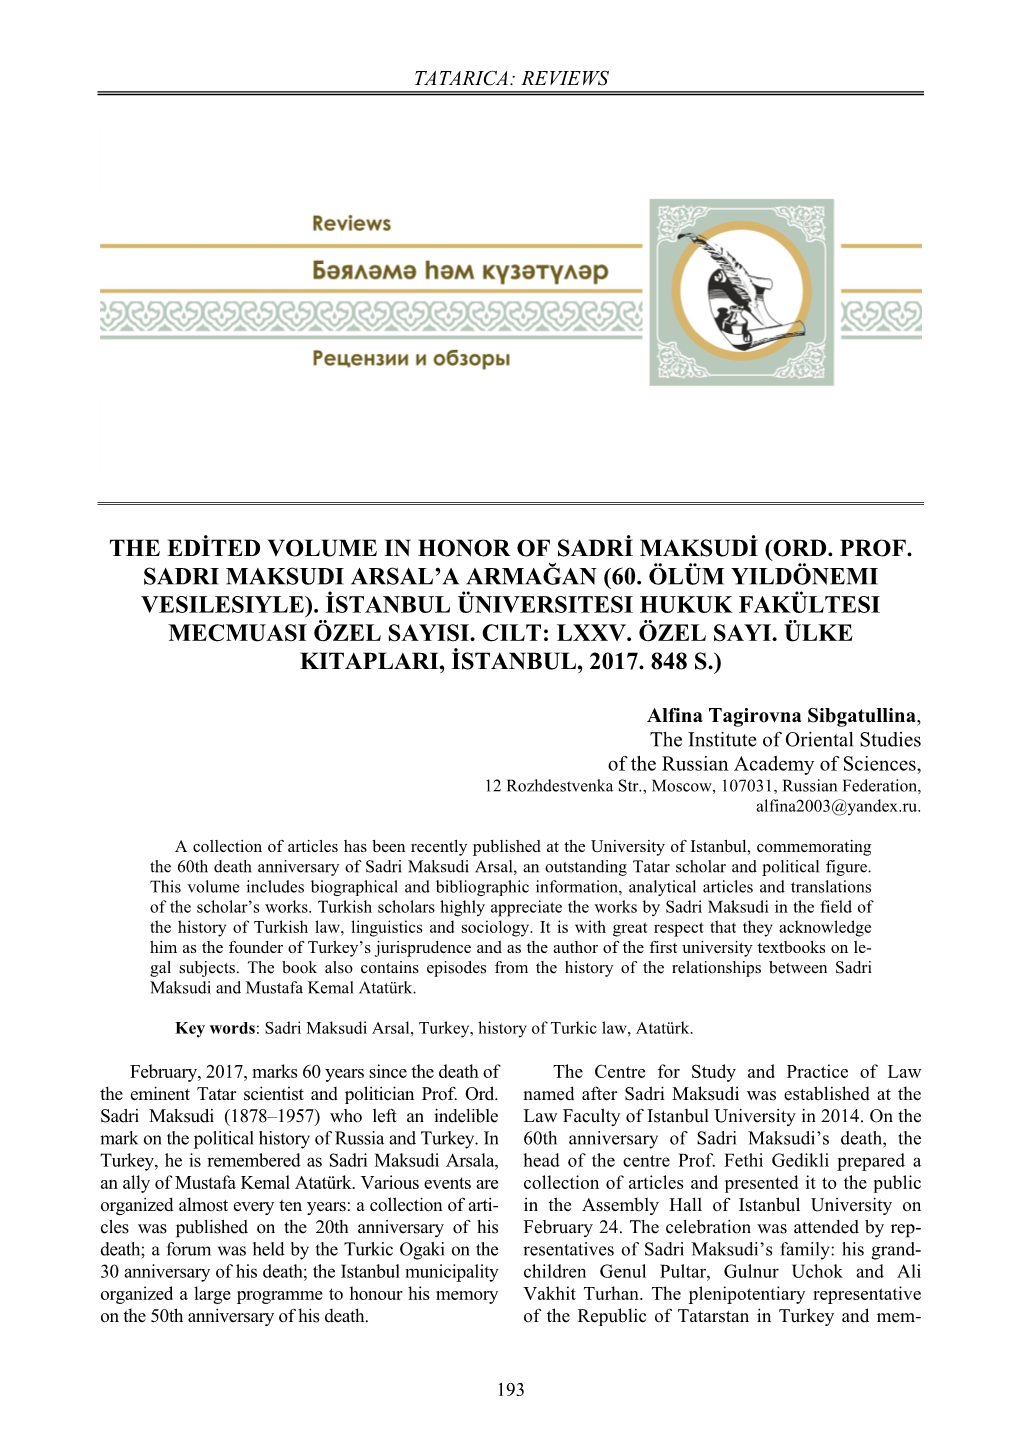 The Edited Volume in Honor of Sadri Maksudi (Ord. Prof